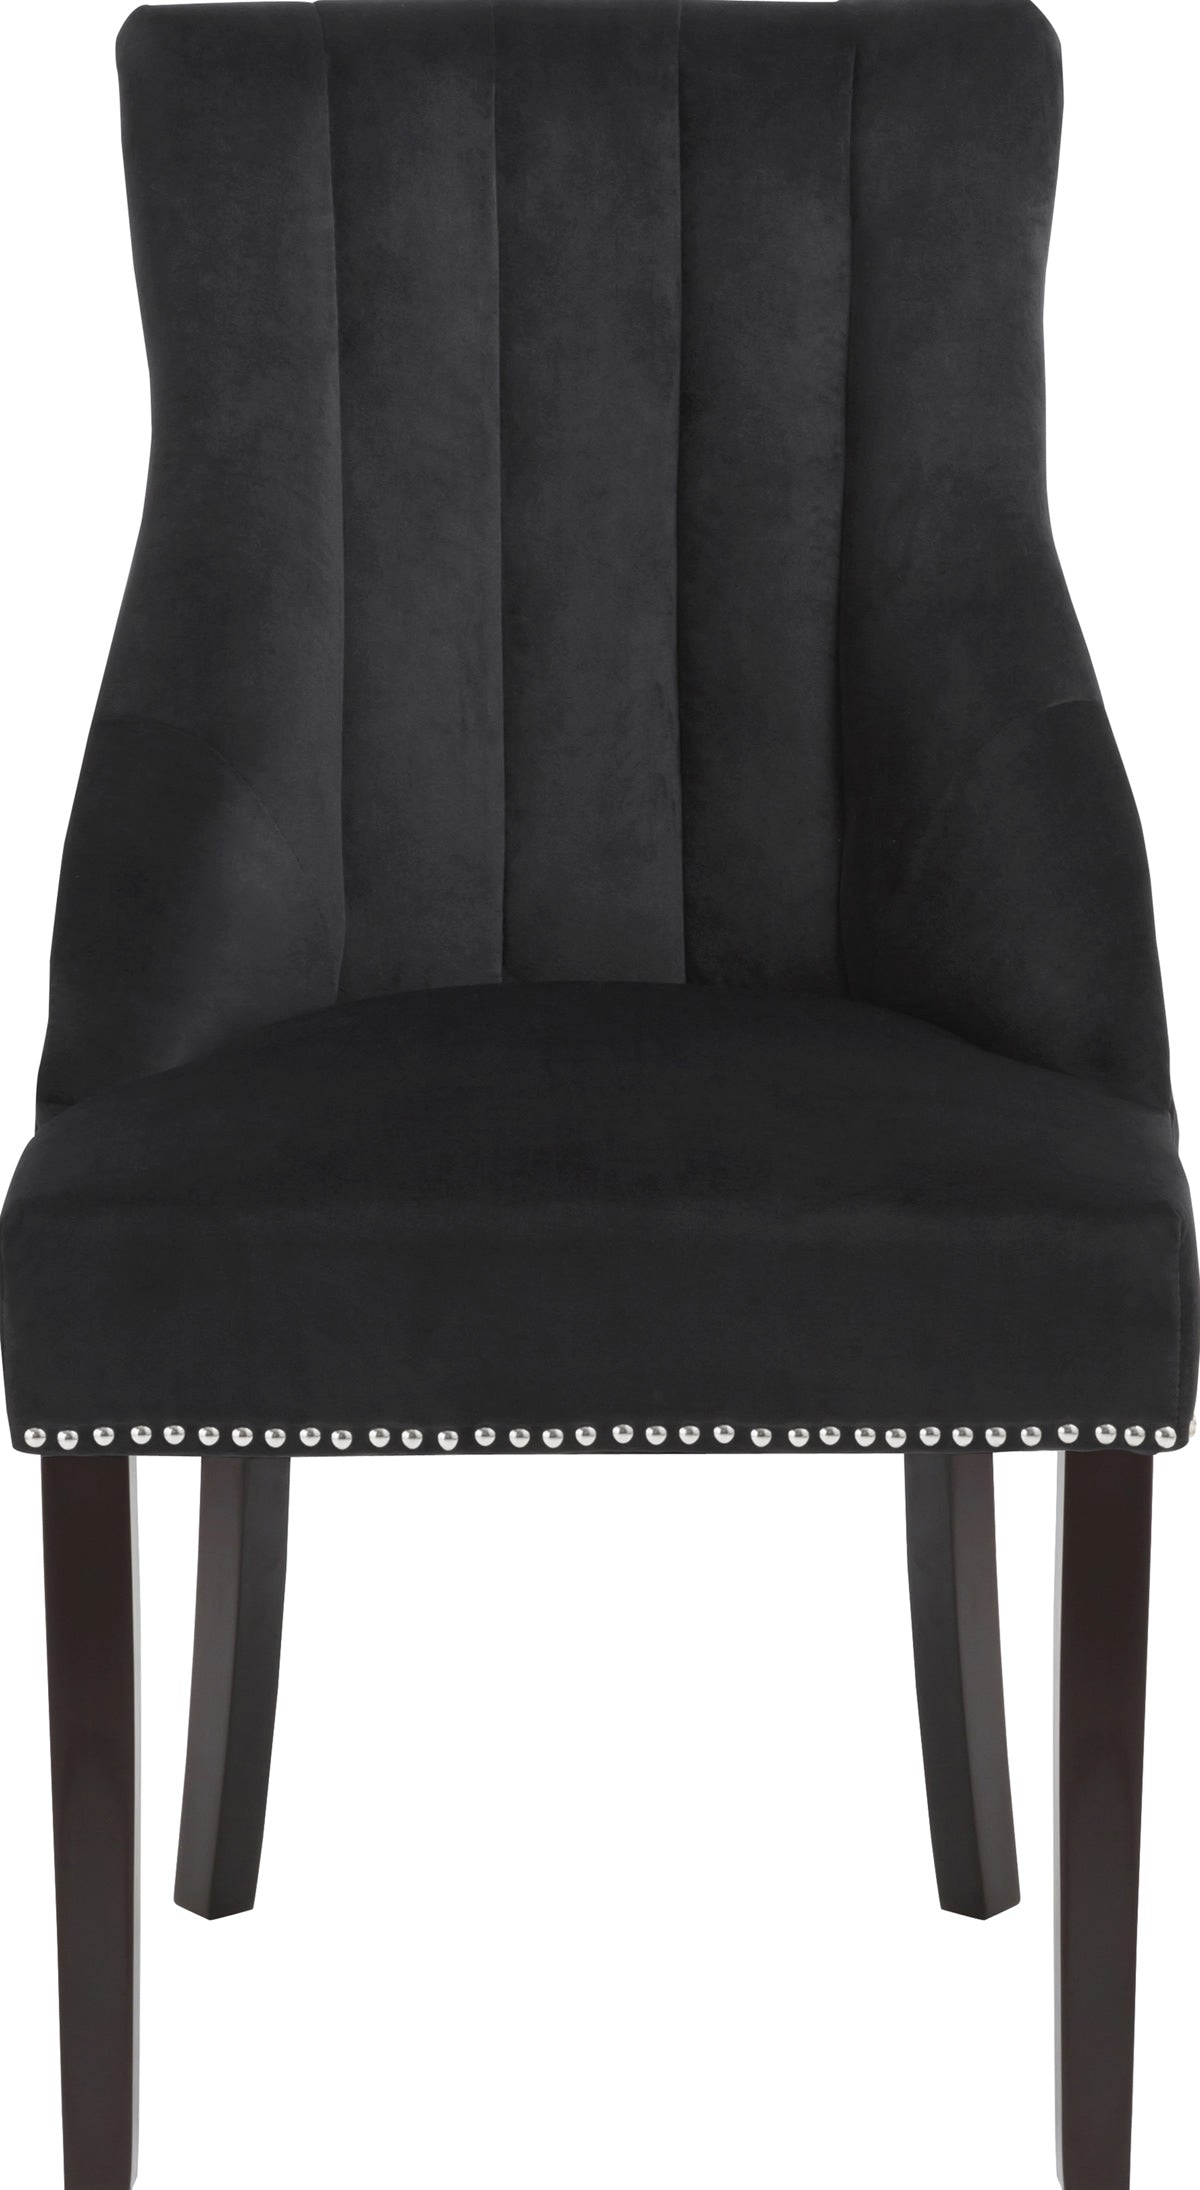 Meridian Furniture Oxford Black Velvet Dining Chair - Set of 2